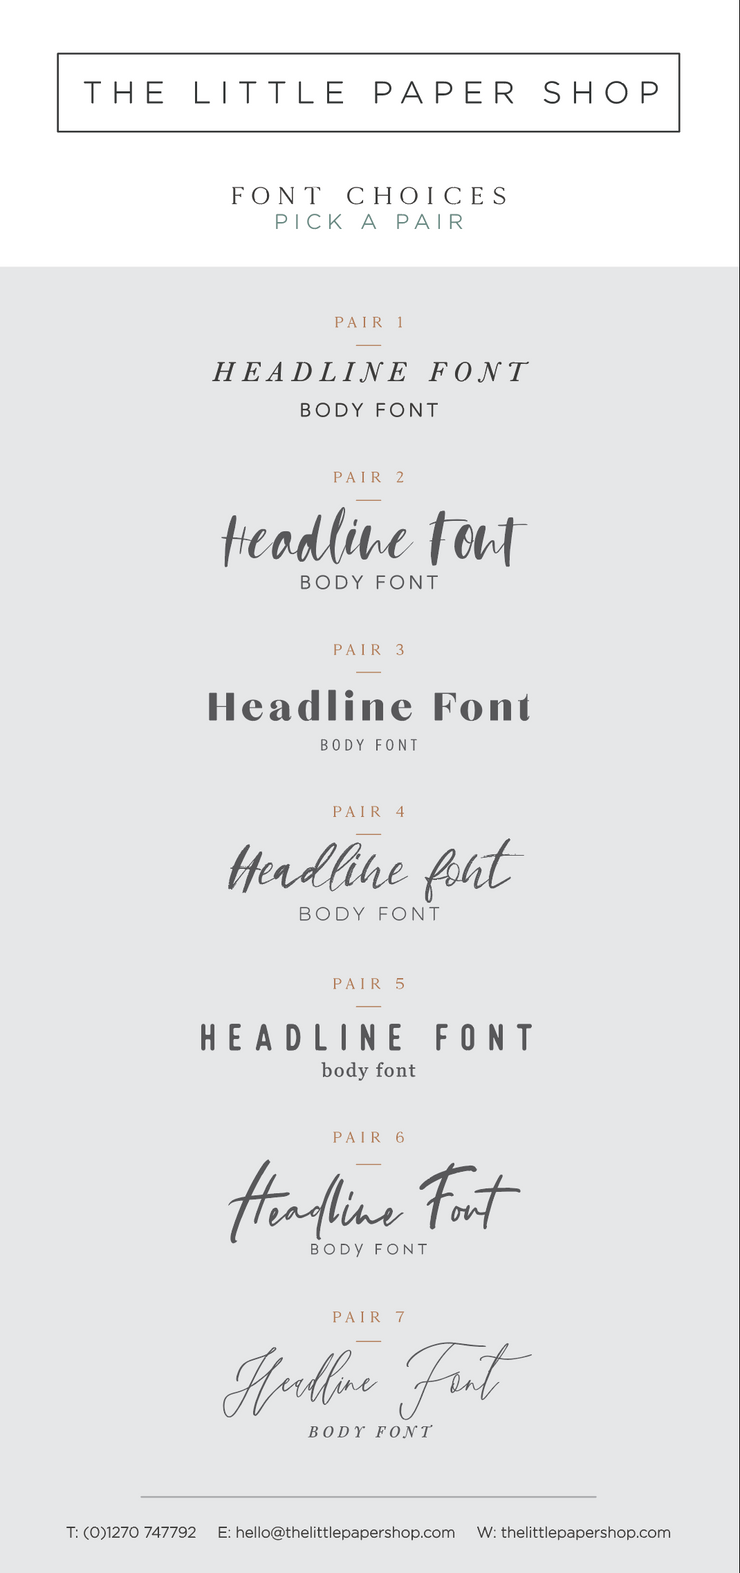 TLPS - Custom Typography Prints A4